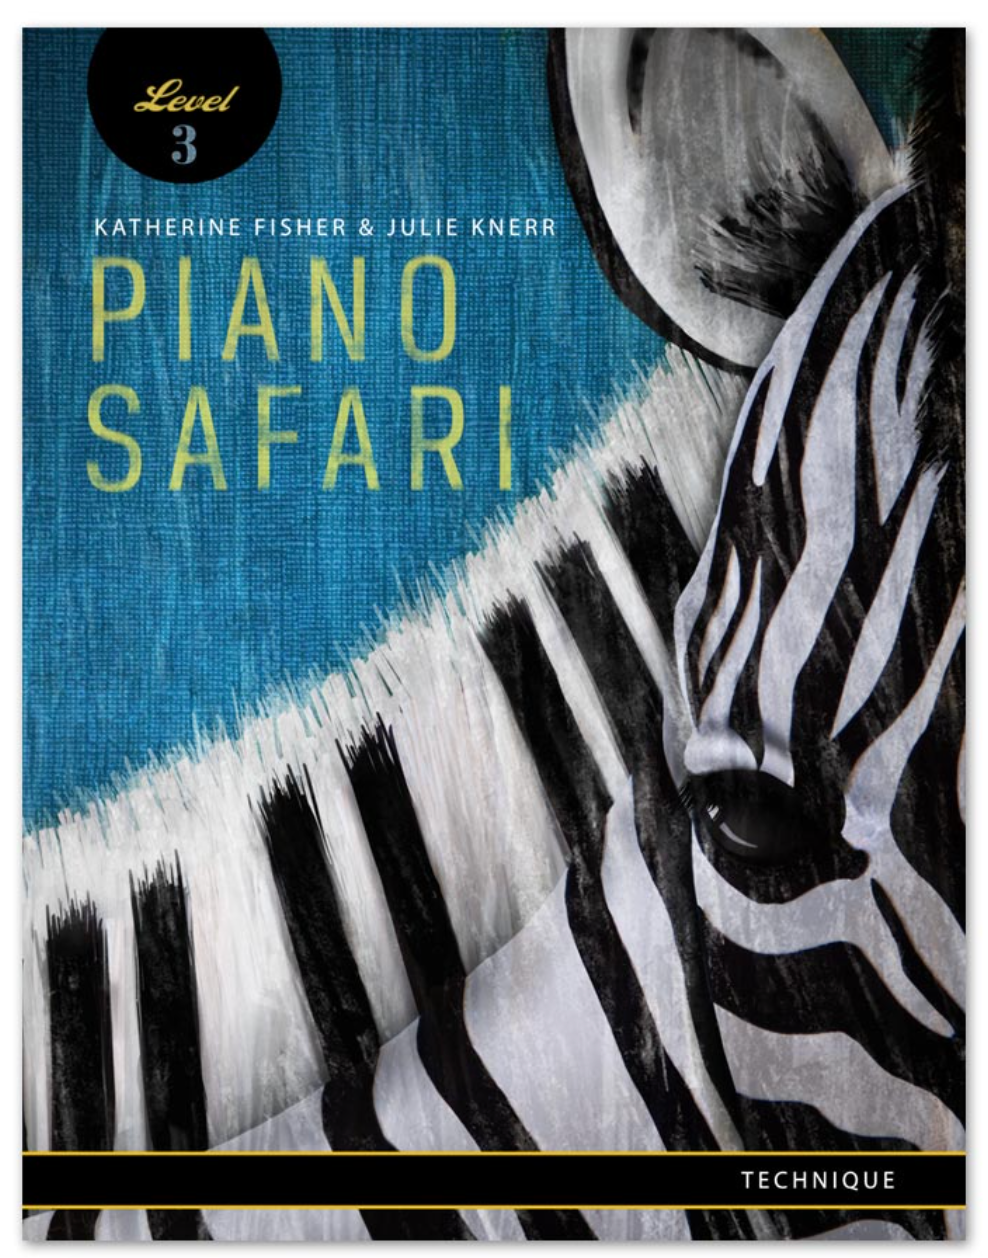 Piano Safari Technique 3 - Fisher Katherine; Hague Julie Knerr Piano Safari PNSF1013